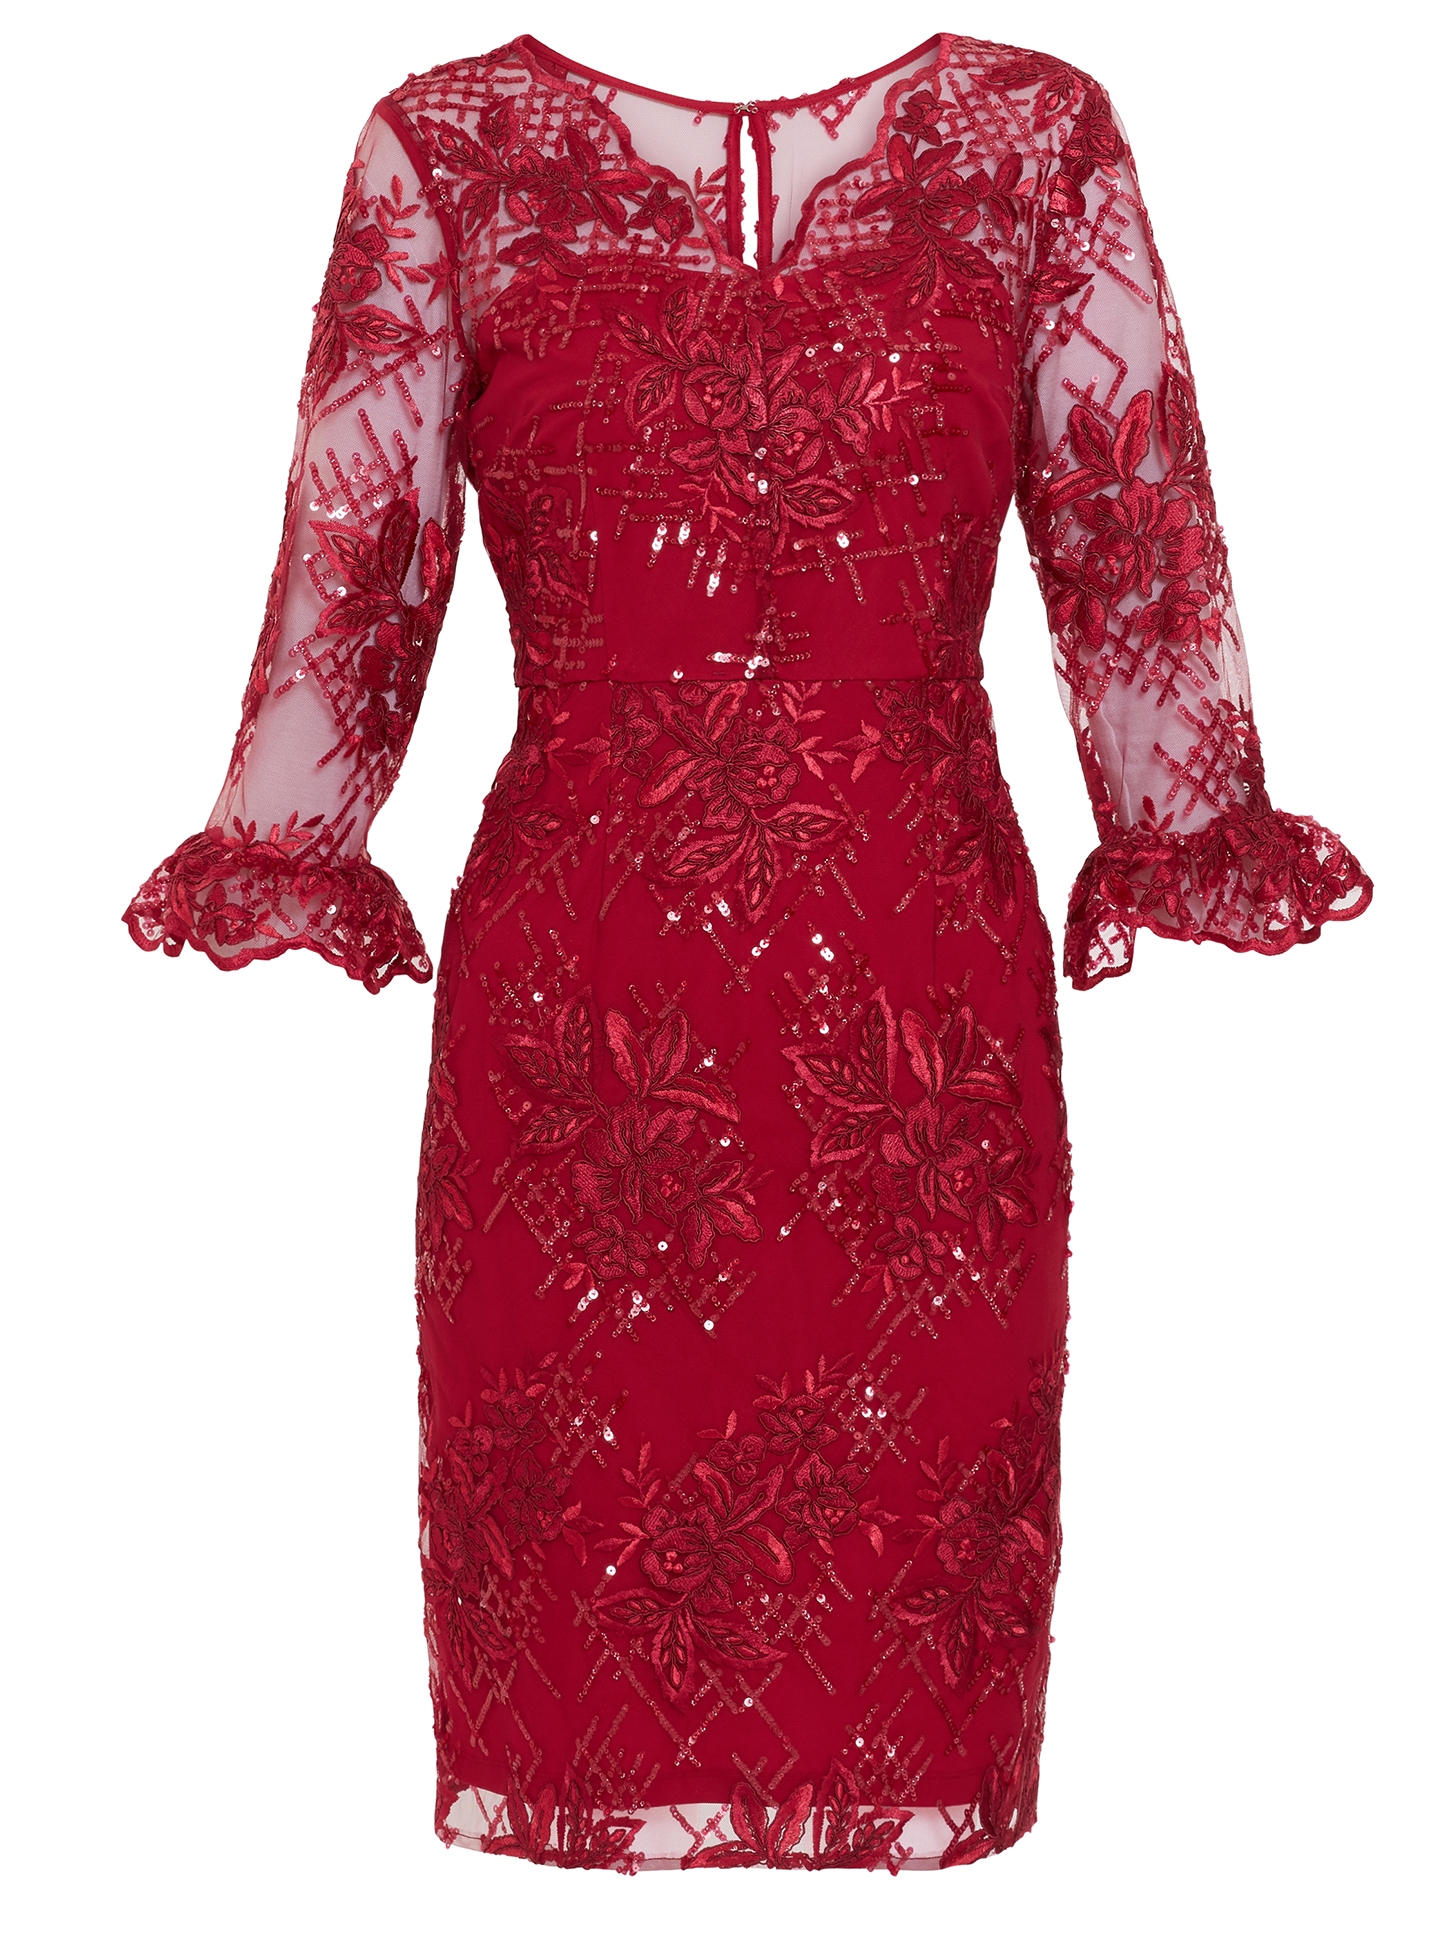 Corla Embroidered Dress